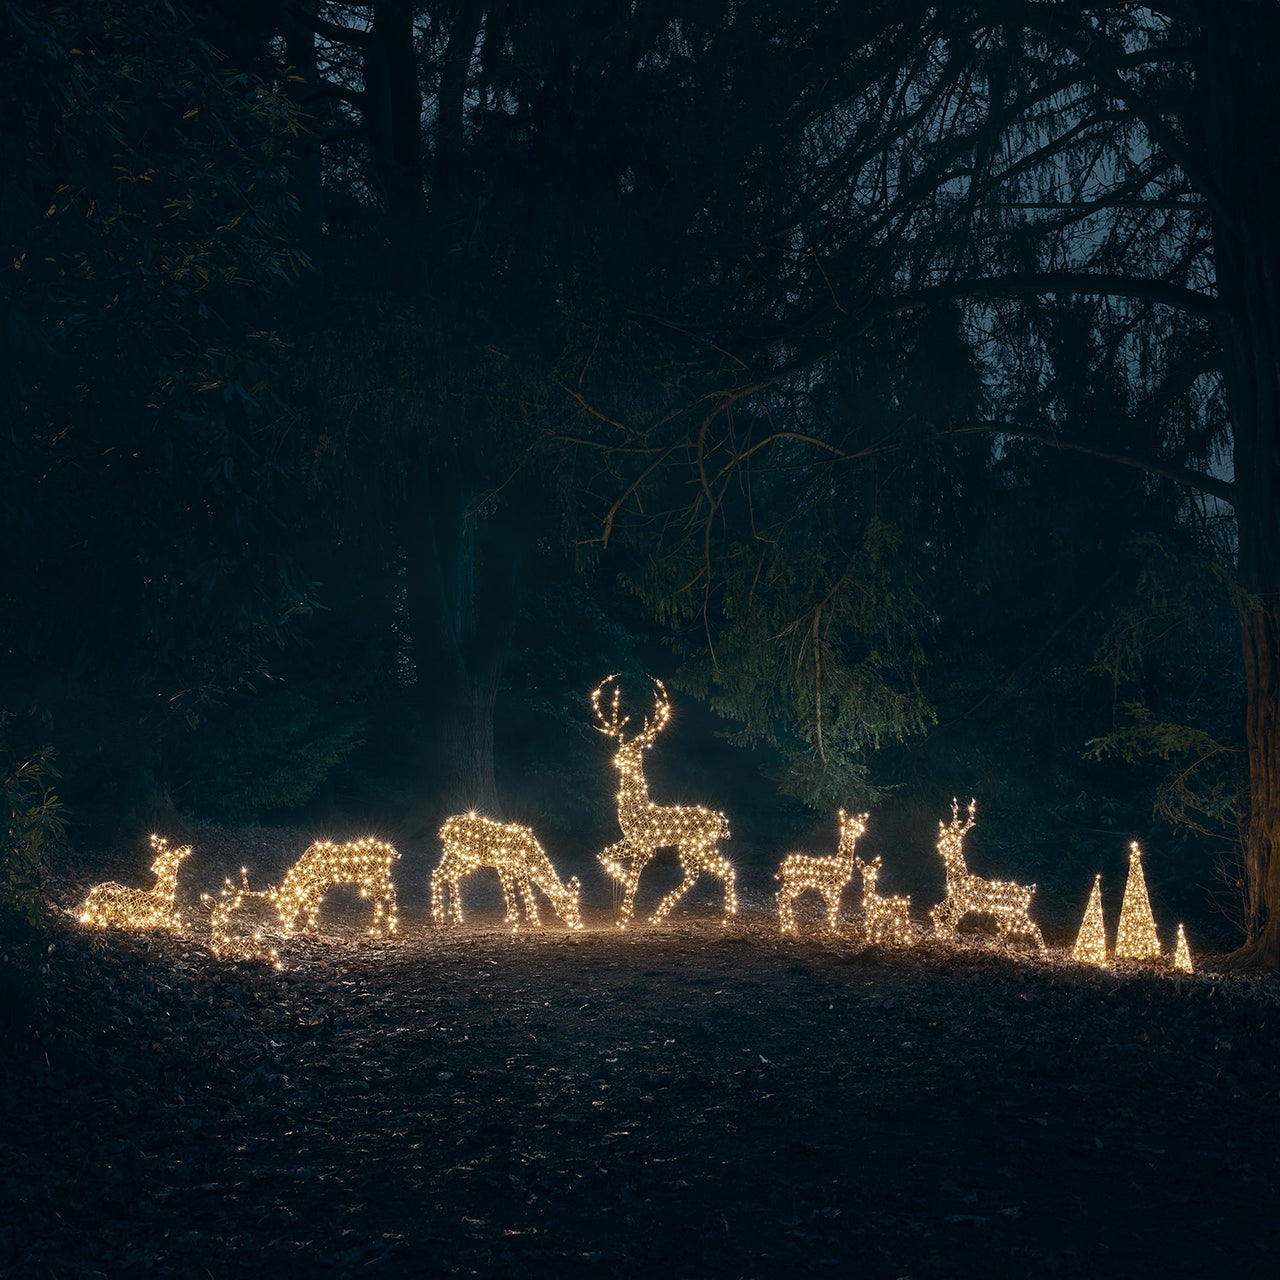 Set of 8 Studley Rattan Light Up Reindeer